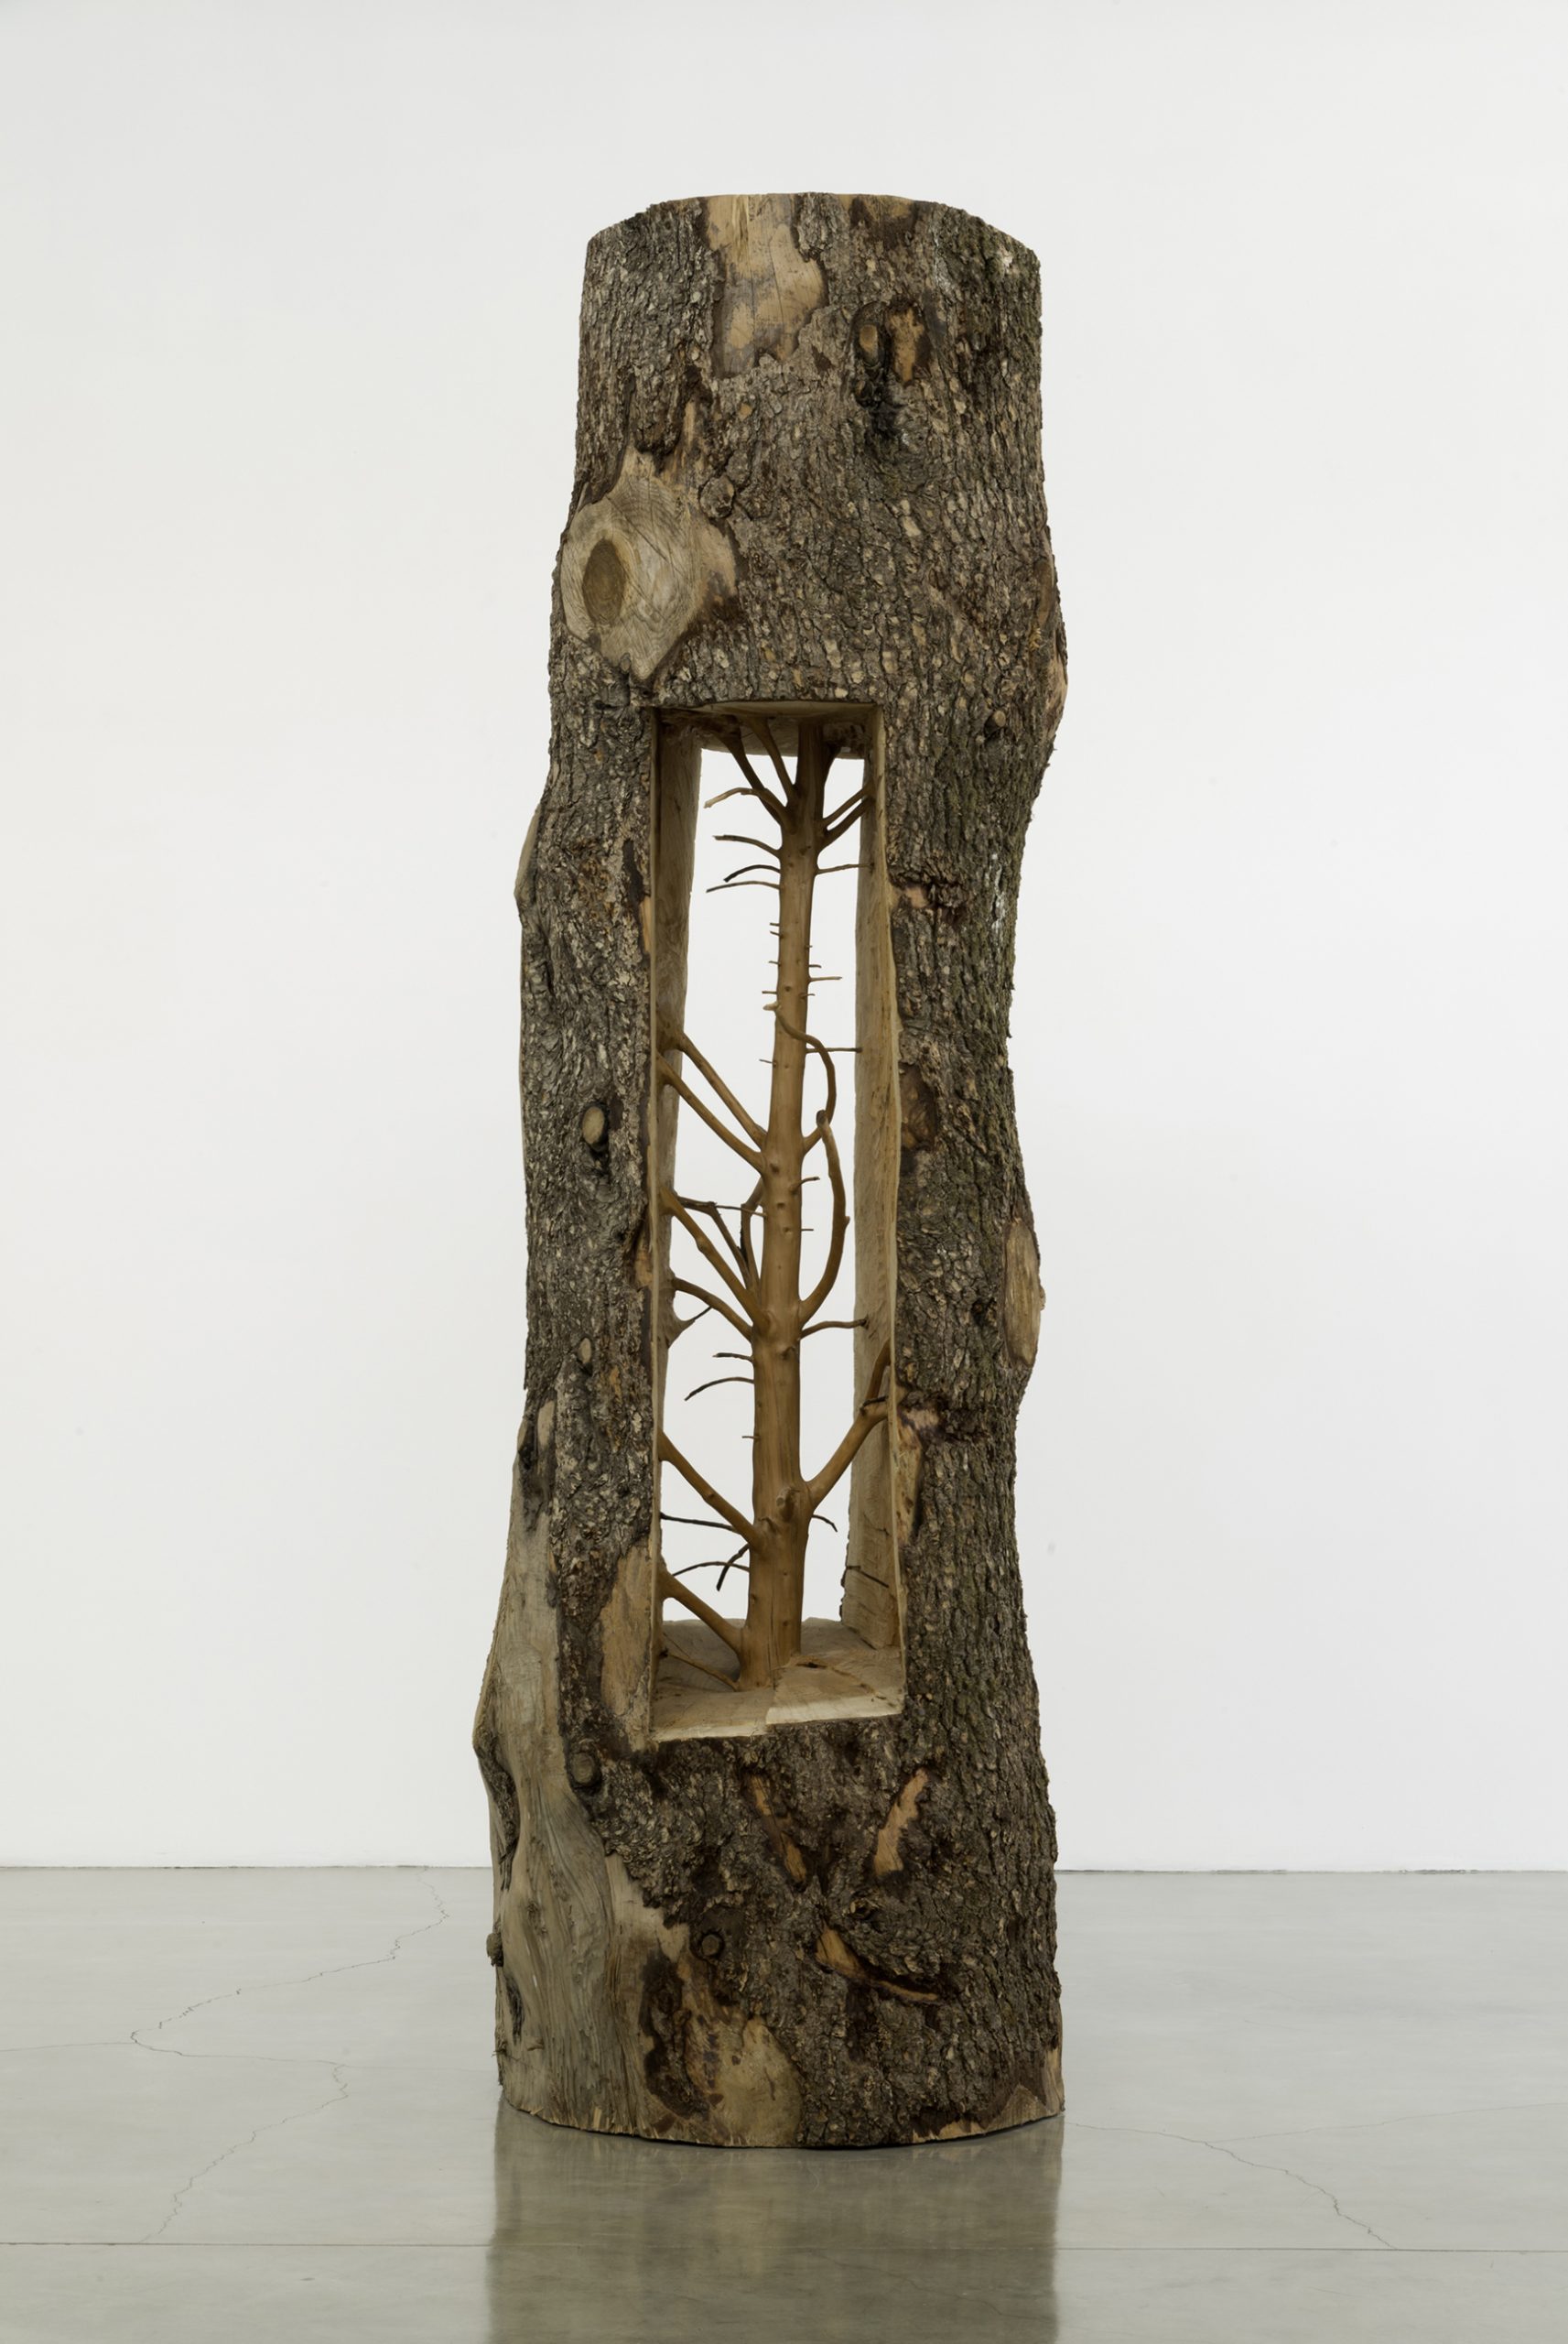 Giuseppe Penone, Albero porta - cedro, 2012, Cedar wood, 316 × 105 × 105 cm, © Giuseppe Penone; photo © Josh White/JWPictures.com; Courtesy Gagosian Gallery